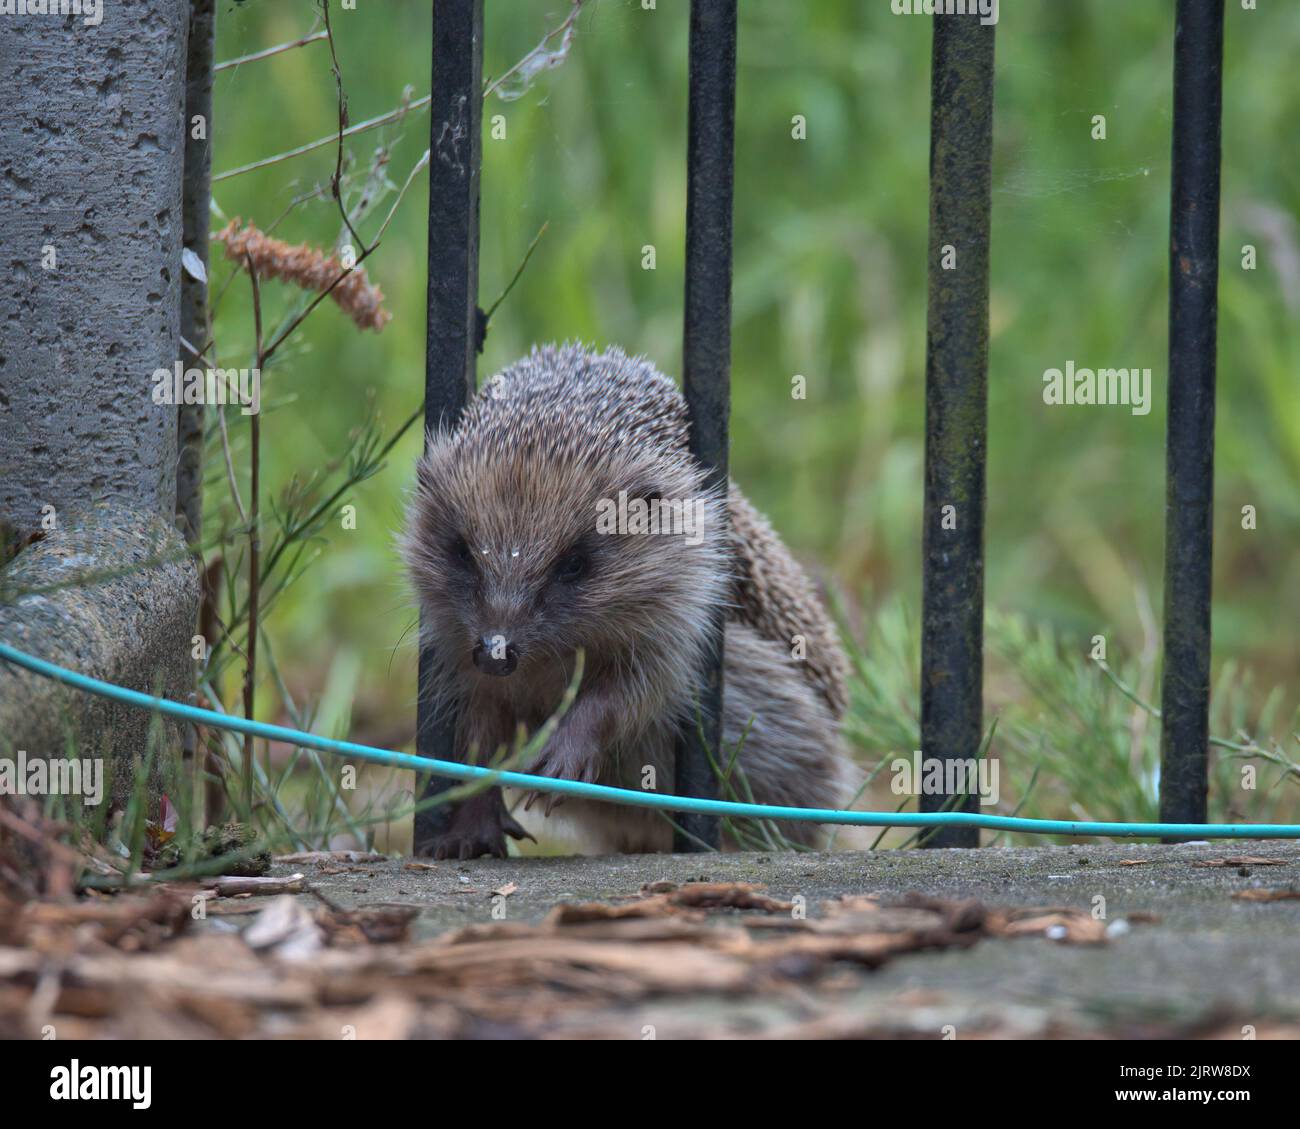 European hedgehog squeezing through the gate railings. Stock Photo